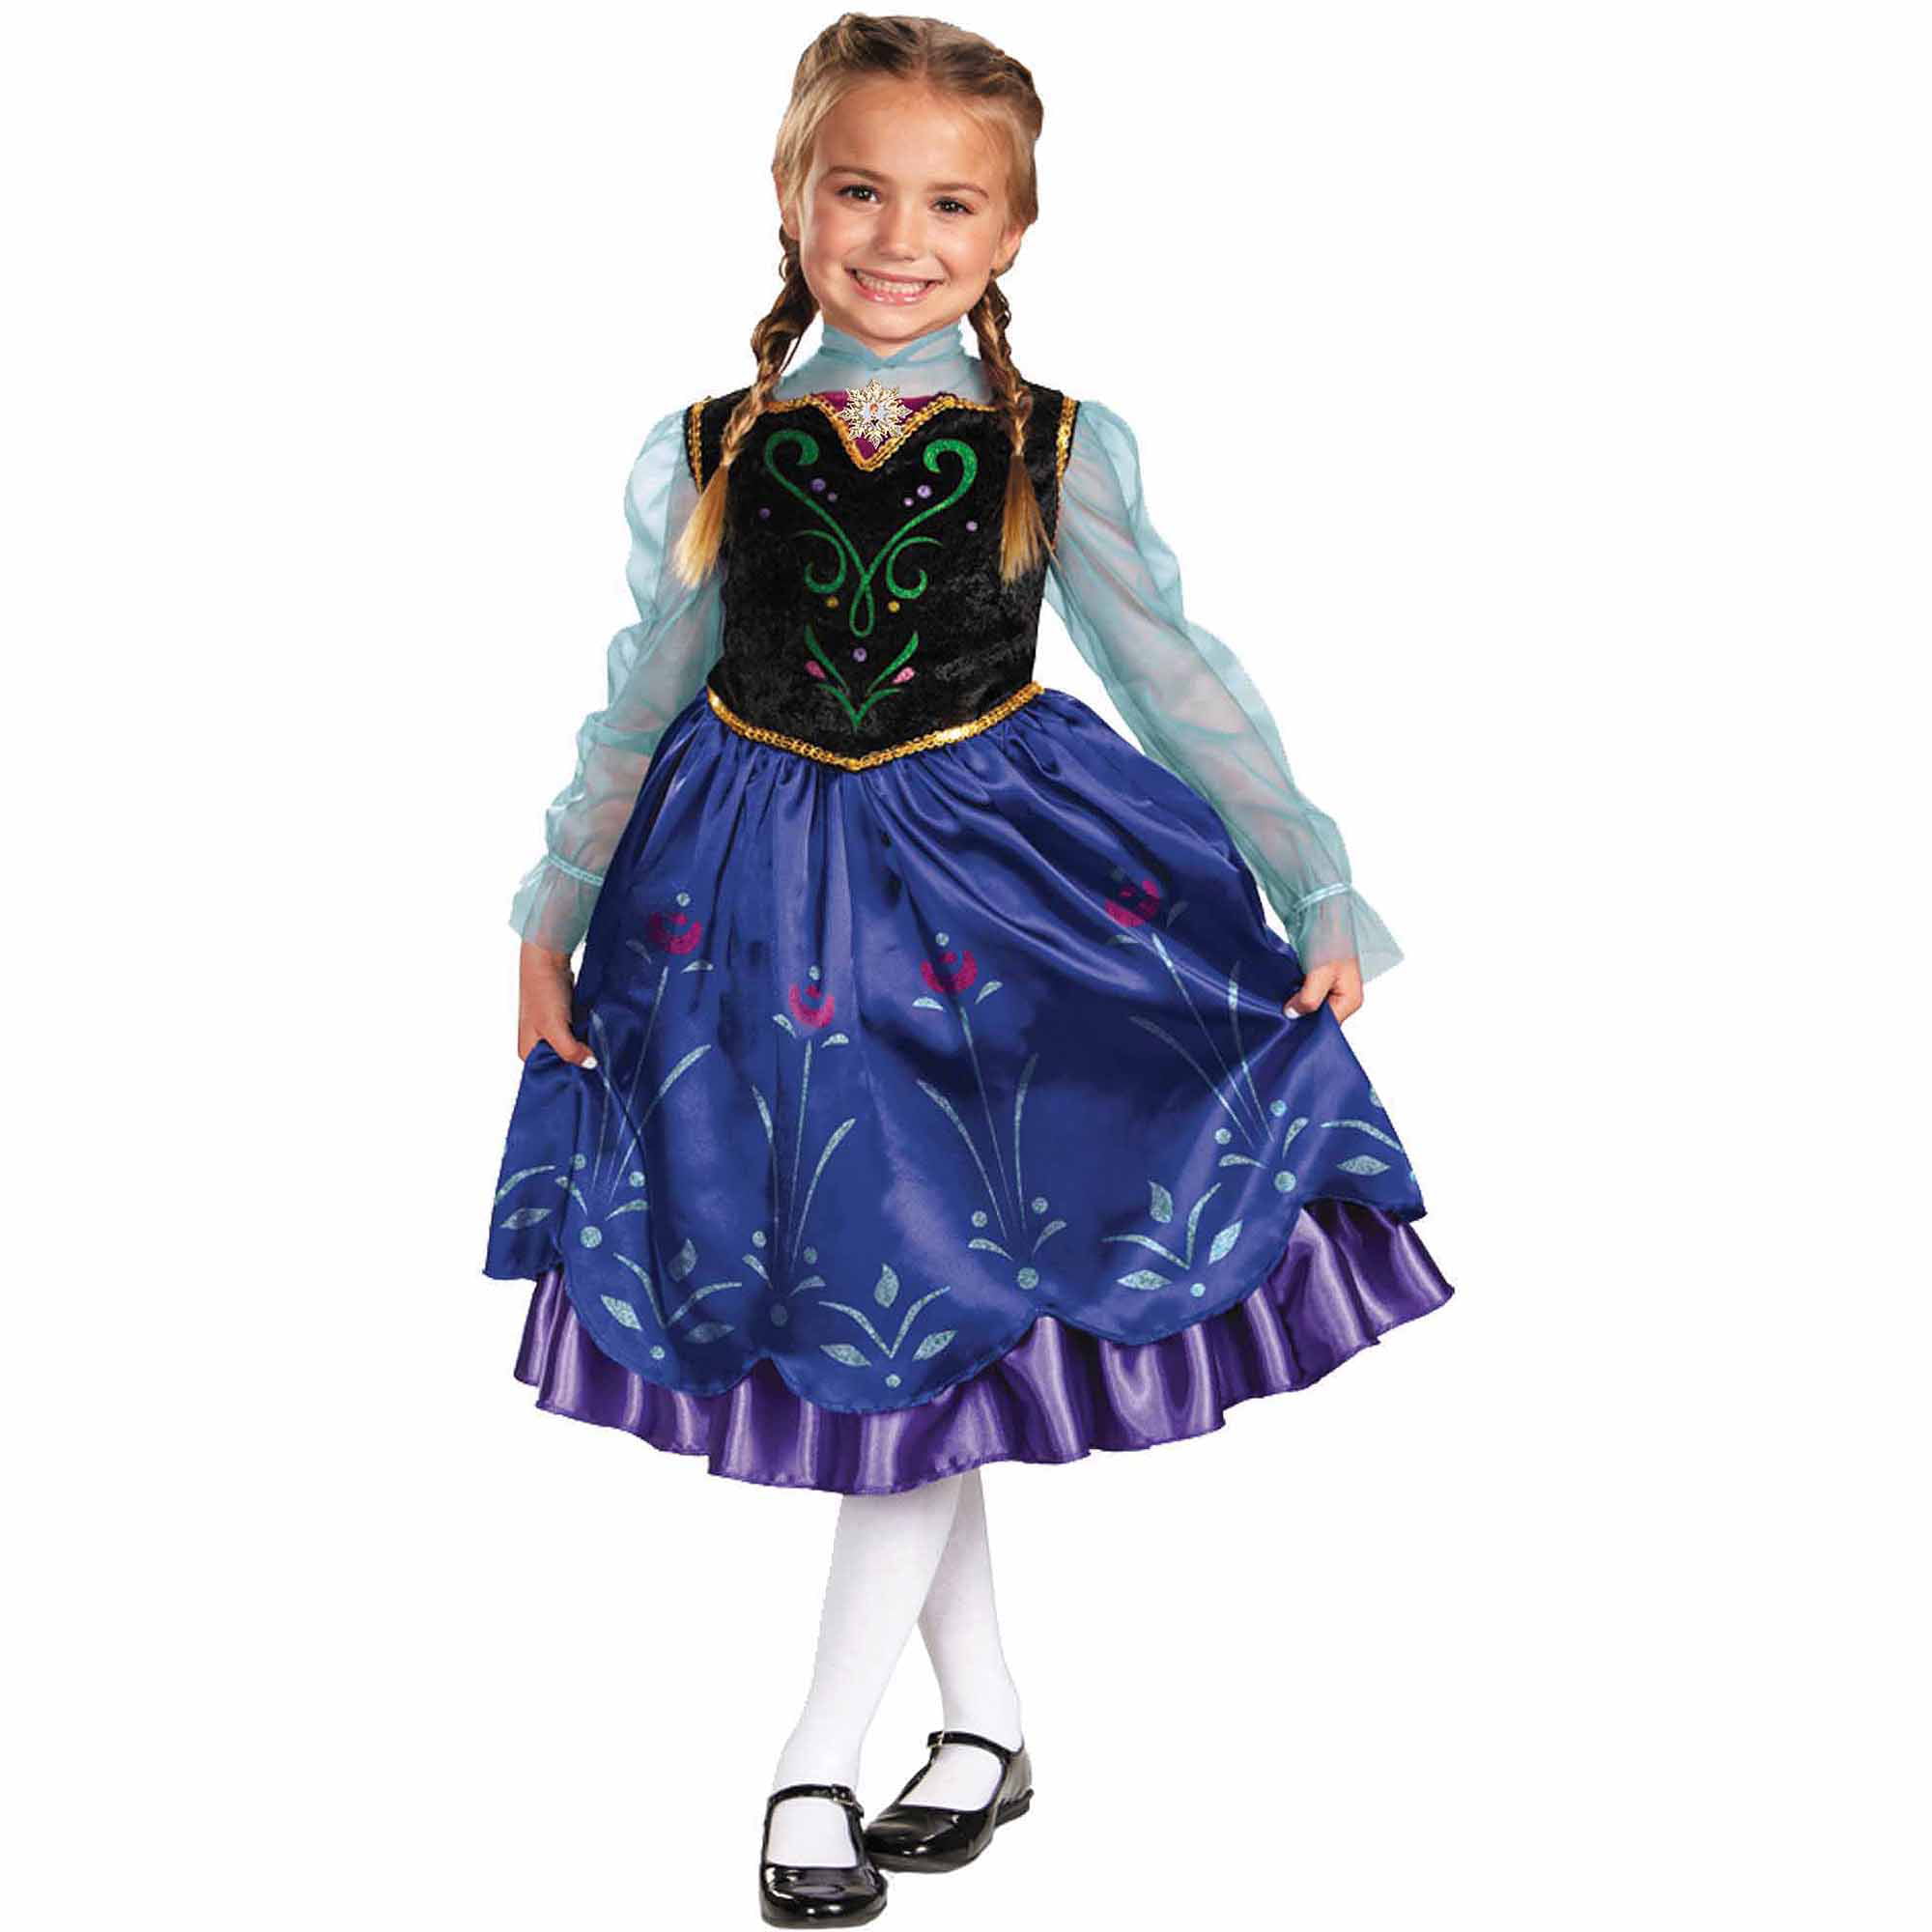 Costume -Girls Toys Details about   Disney Frozen Anna's Dress 